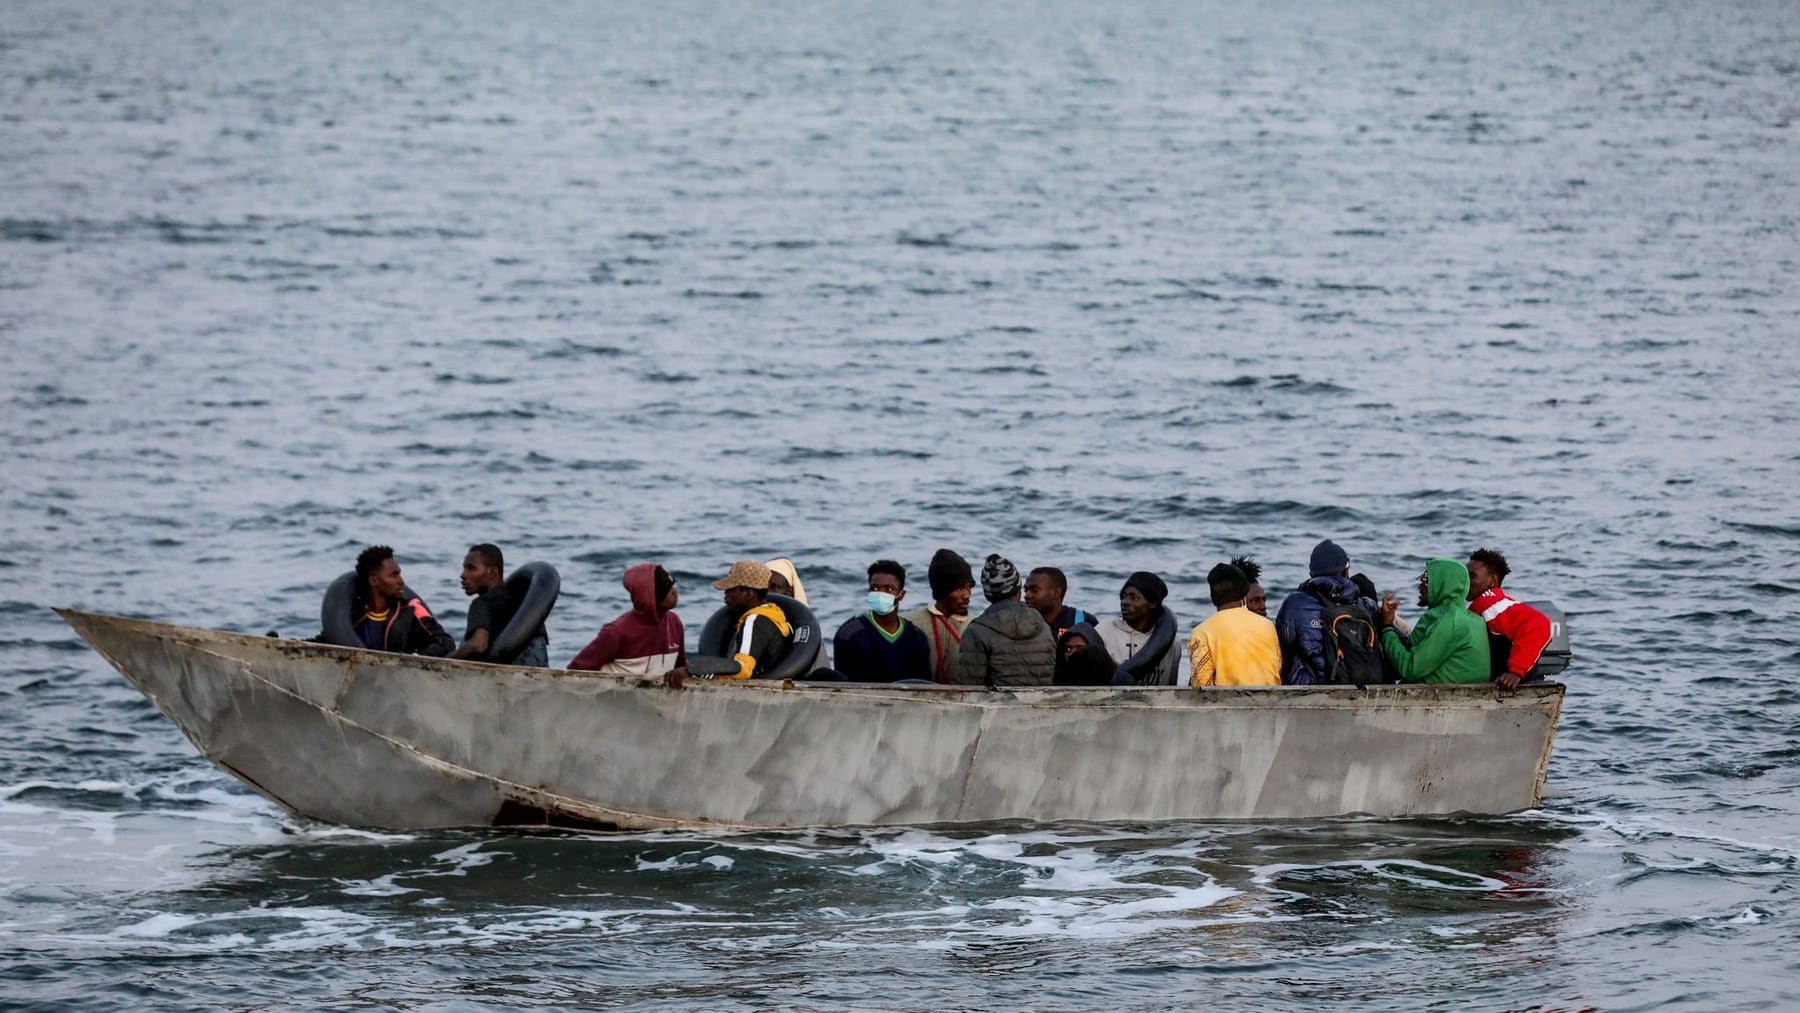 Boot mit Flüchtlingen vor Sizilien gekentert – mindestens fünf Tote